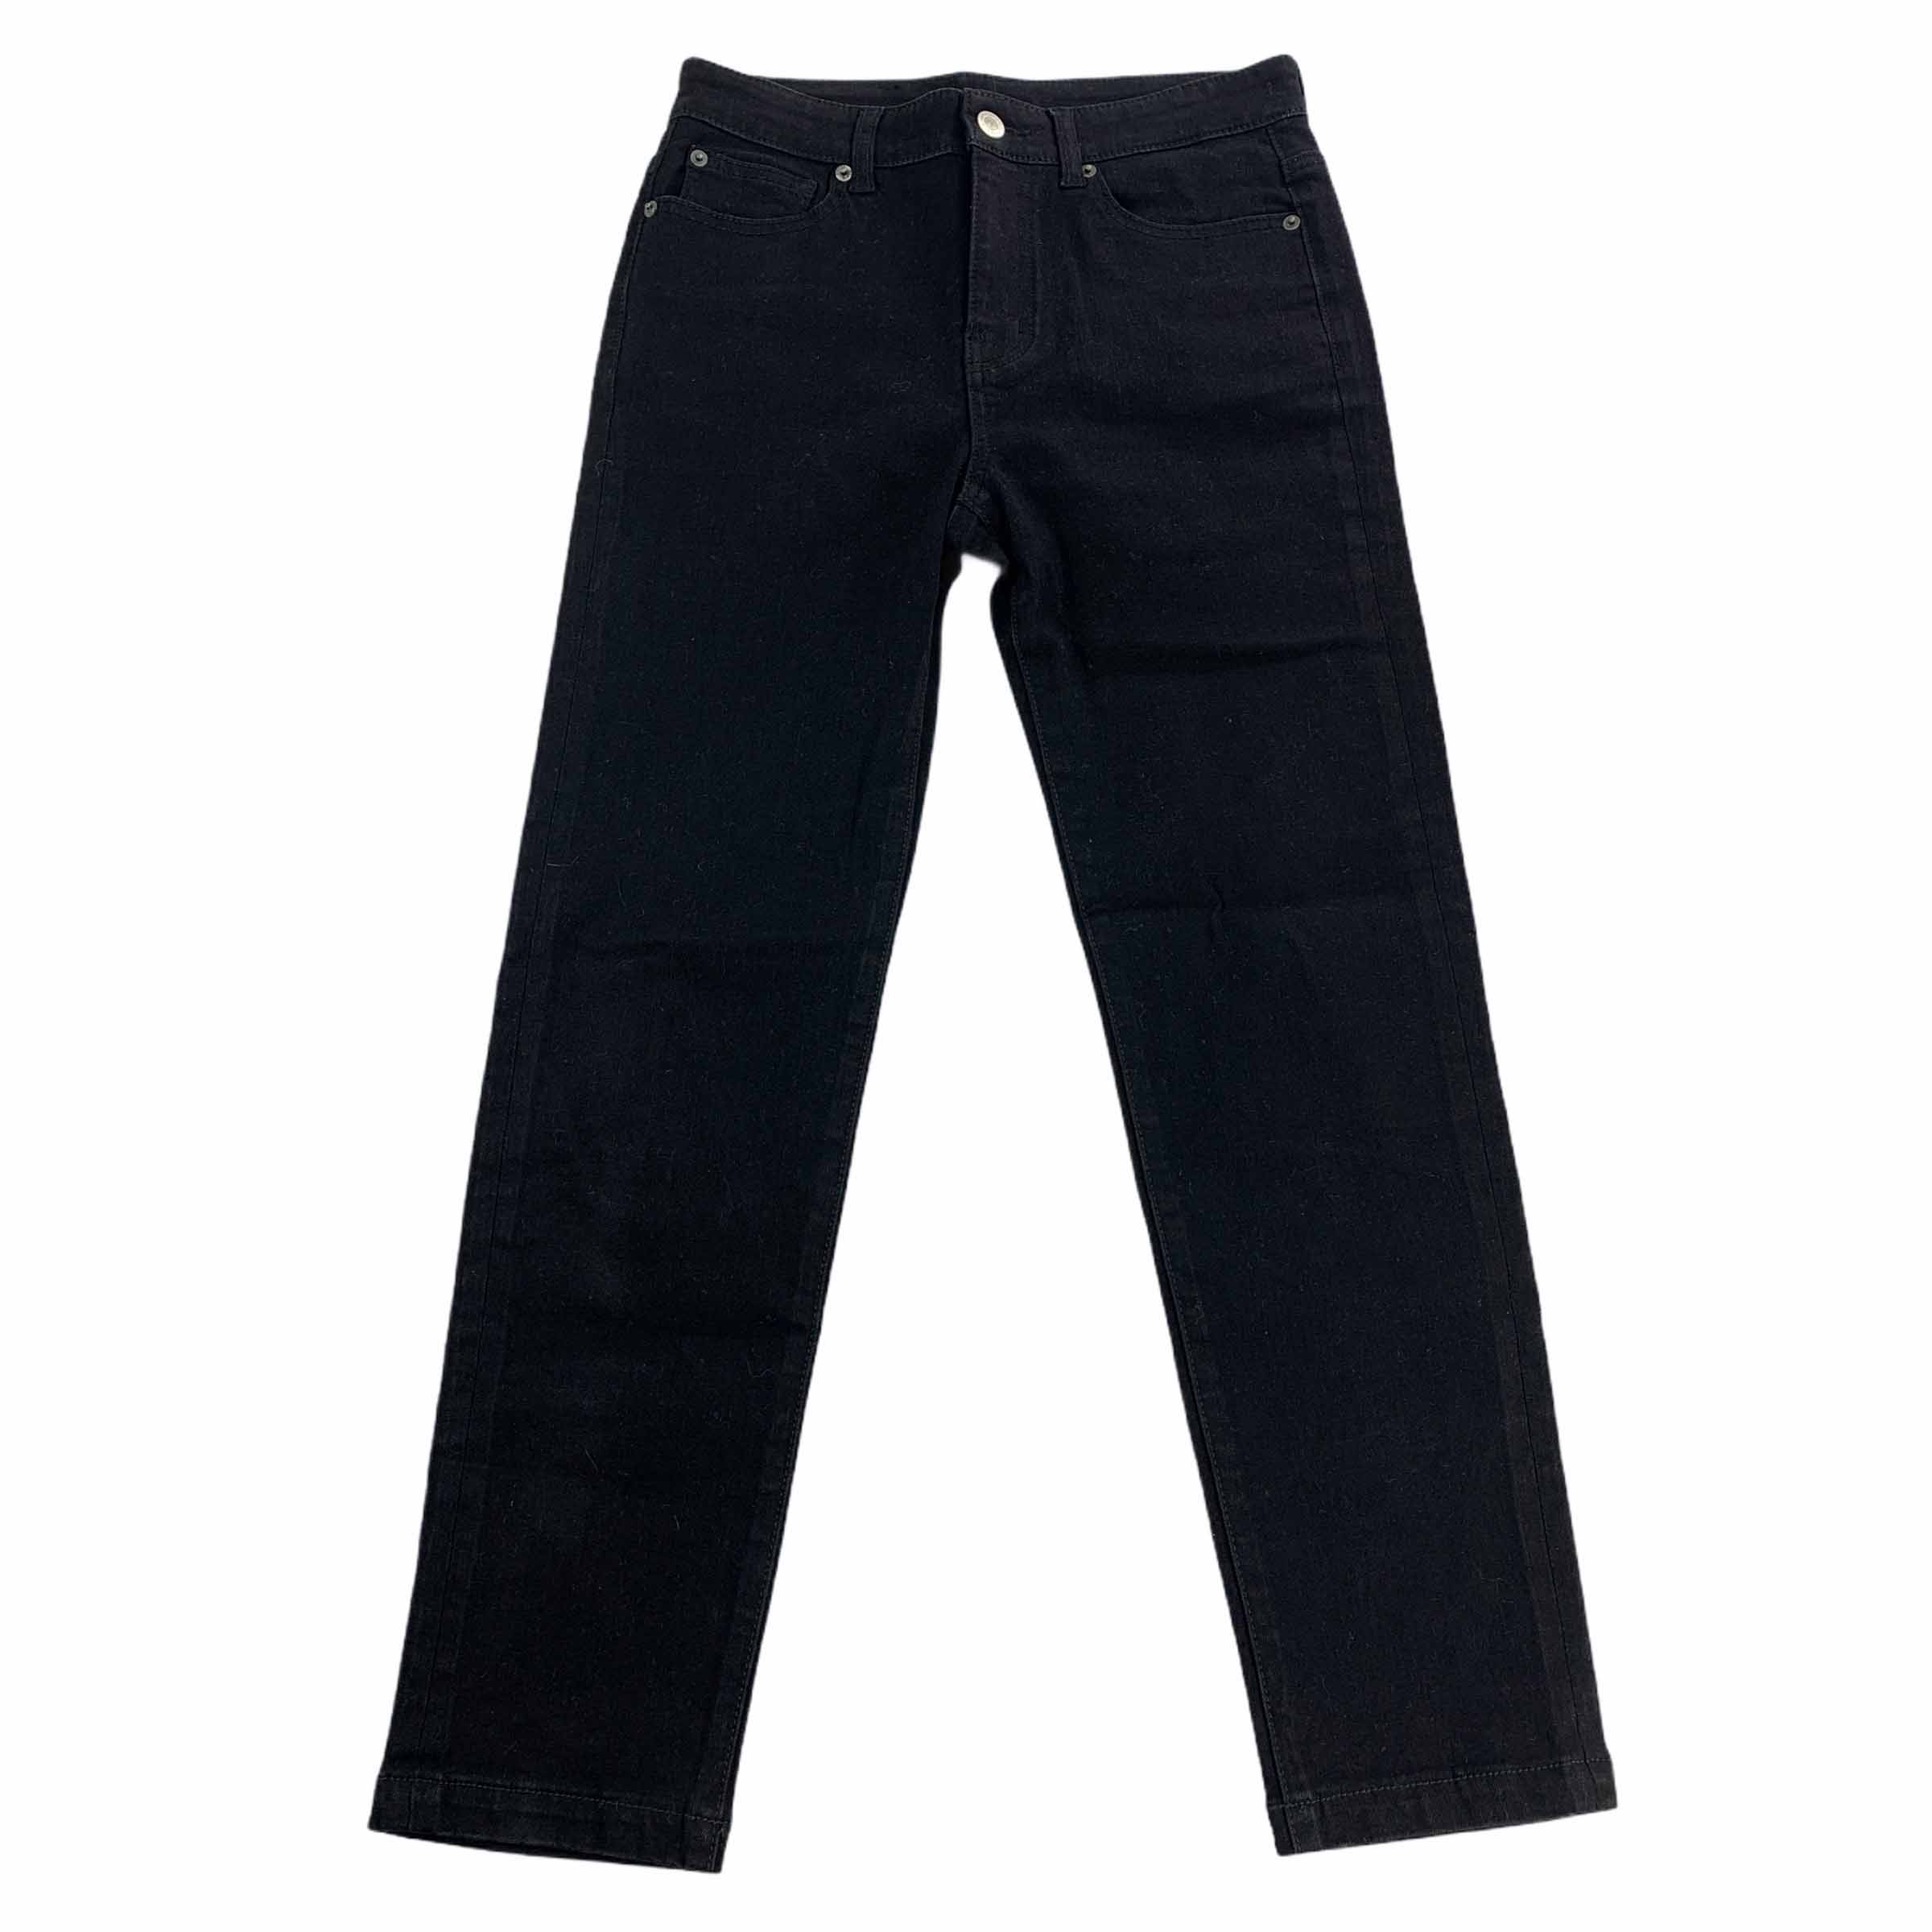 [Andew] Straight Slim Cotton Pants BK - Size 28